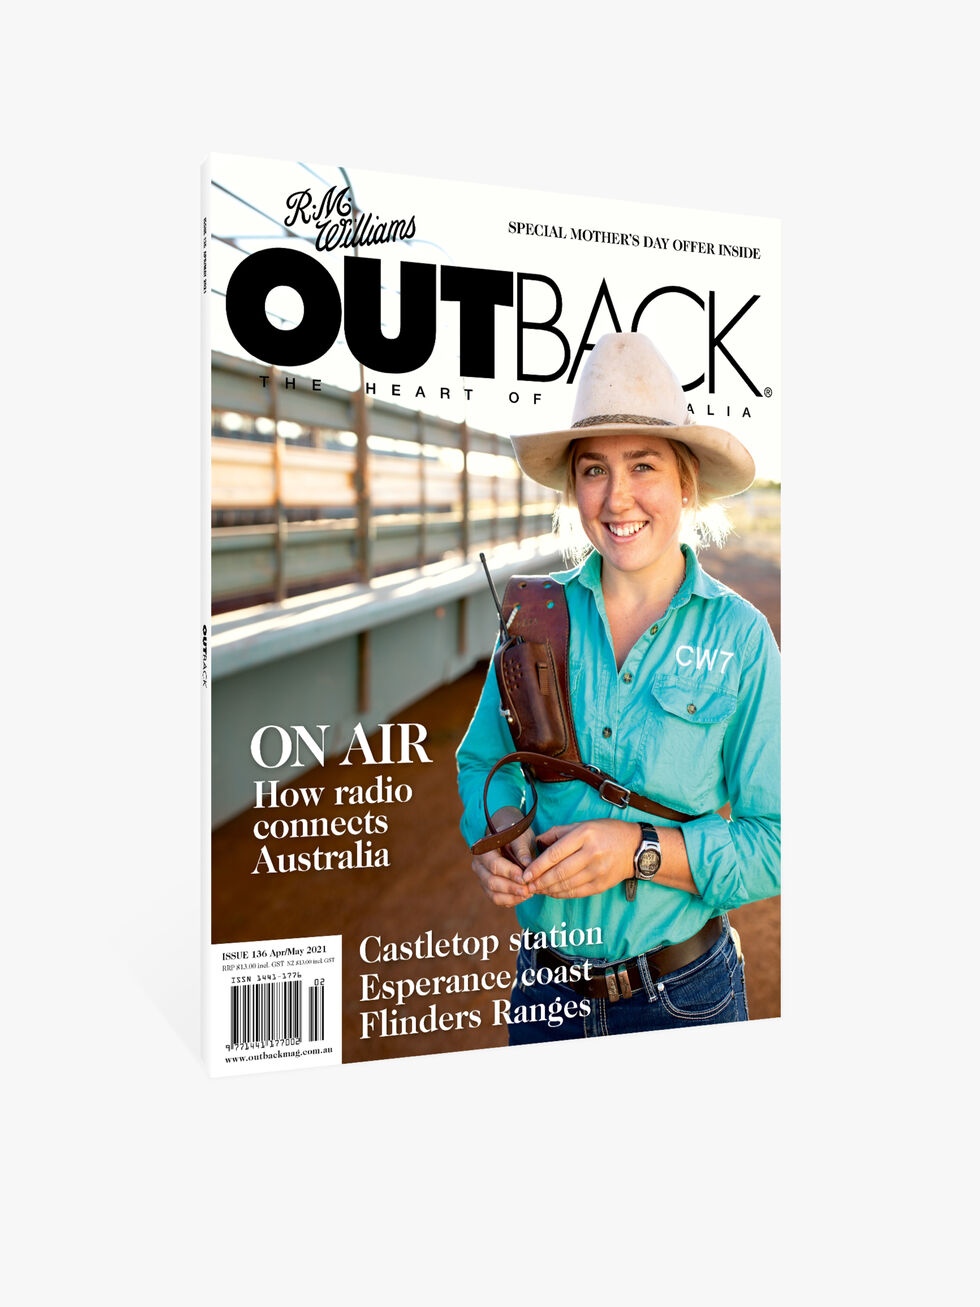 OUTBACK magazine spread